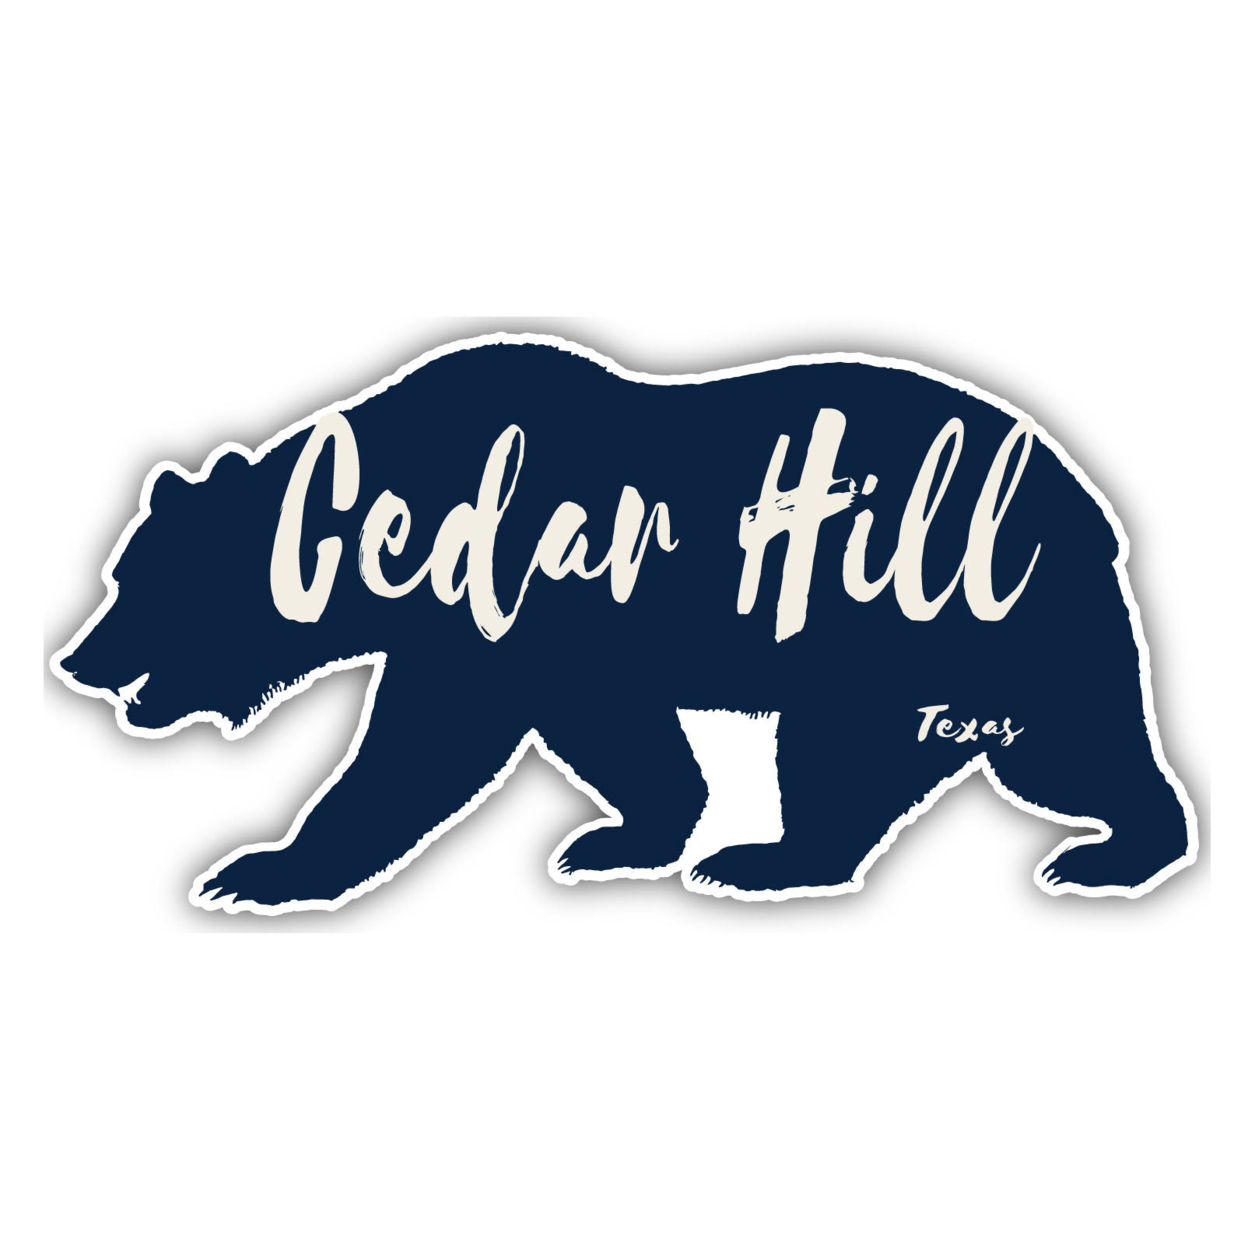 Cedar Hill Texas Souvenir Decorative Stickers (Choose Theme And Size) - Single Unit, 4-Inch, Bear